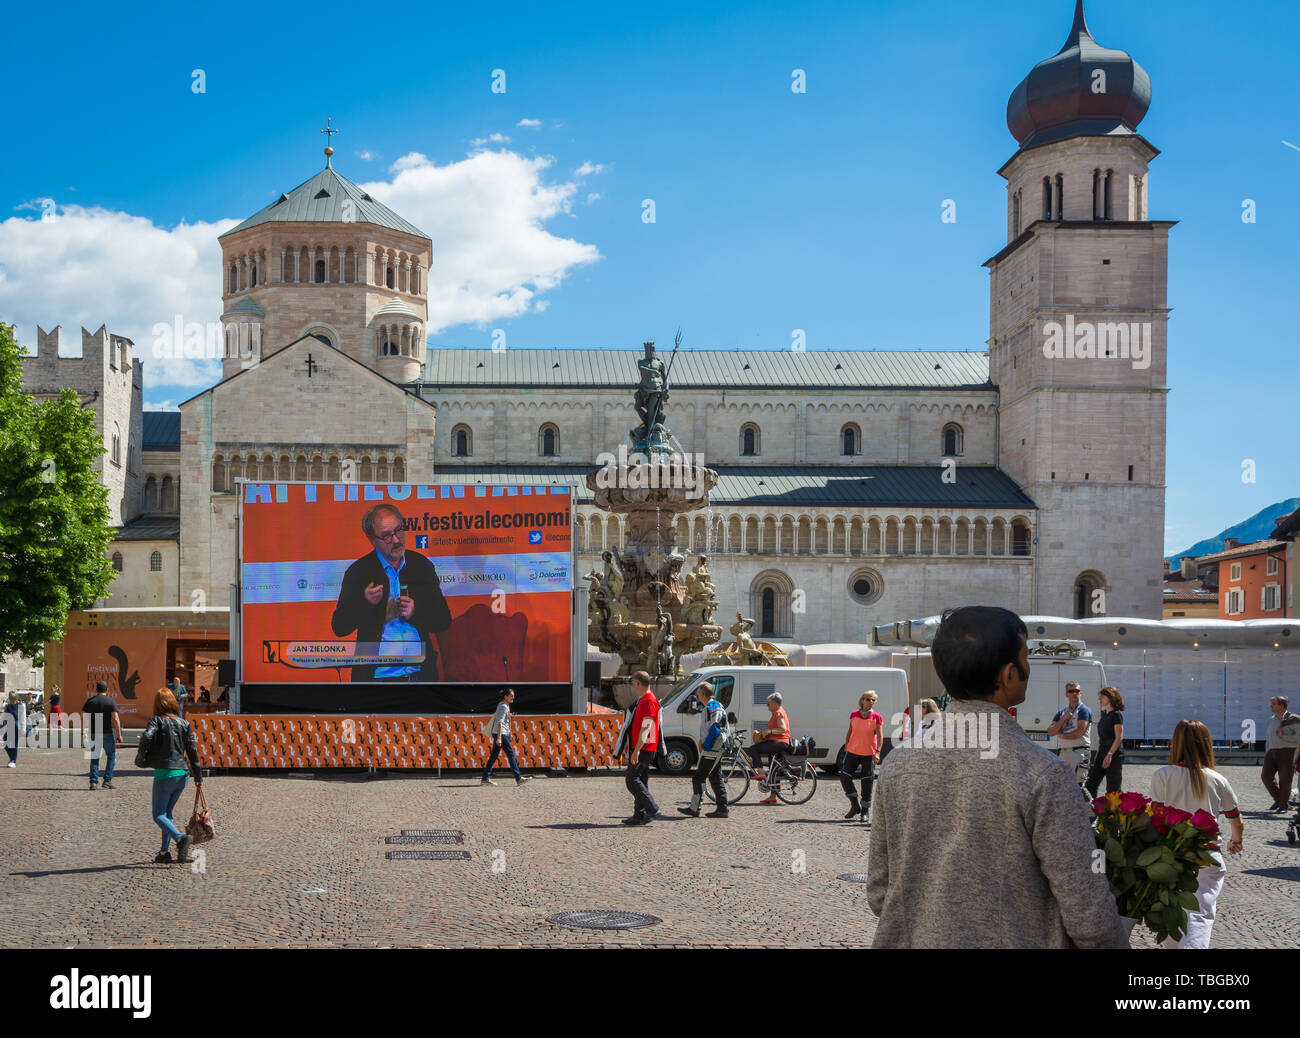 TRENTO, Italy - 31 may, 2019: International Festival of Economy, Duomo square, Trento, Trentino Alto Adige, Italy, Europe. The Festival of Economics t Stock Photo